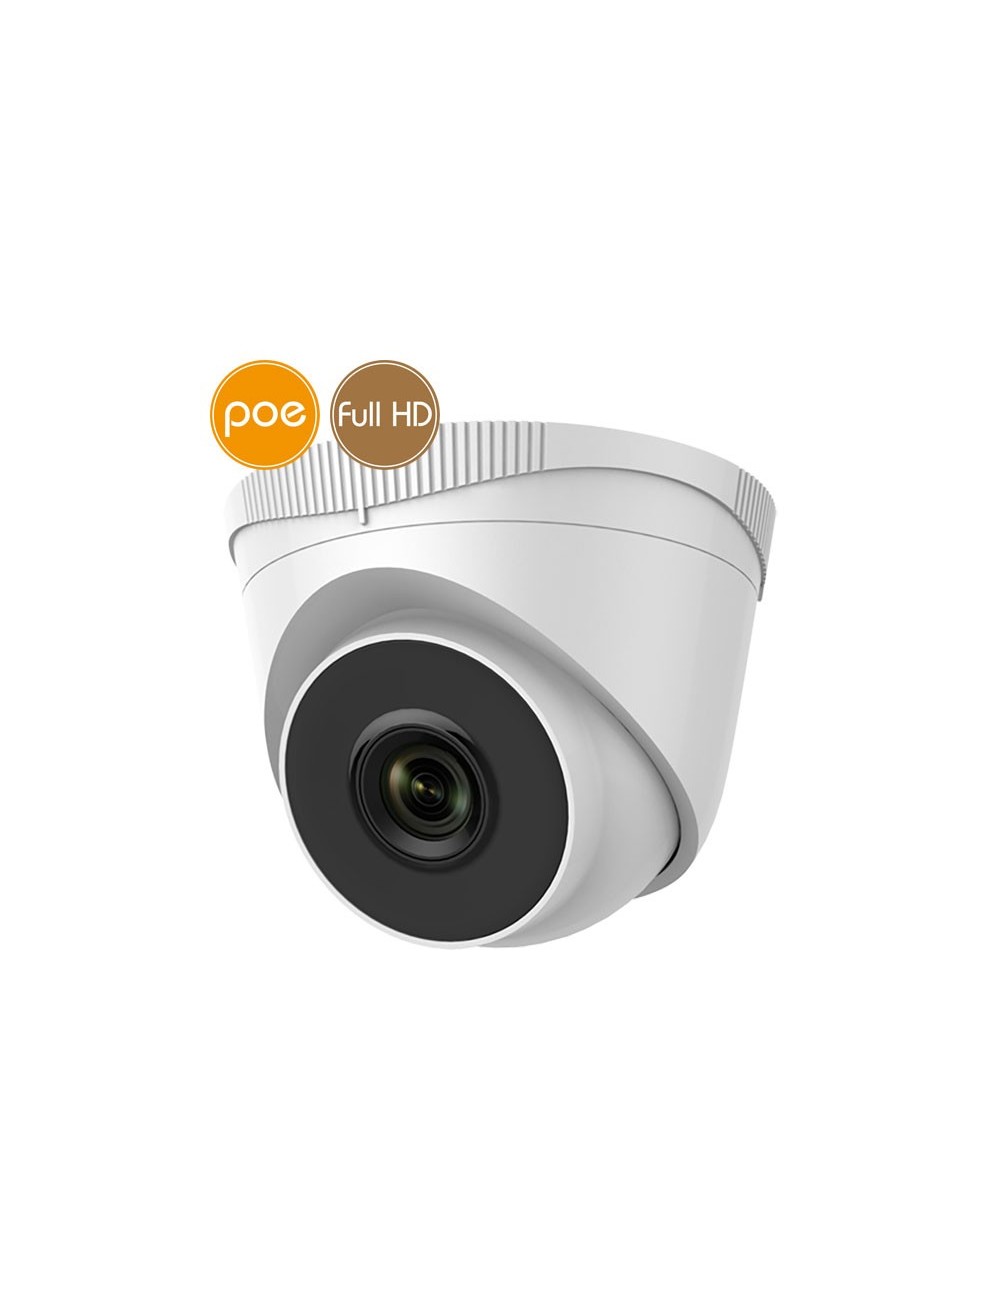 Camera dome IP SAFIRE PoE - Full HD (1080p) - IR 30m